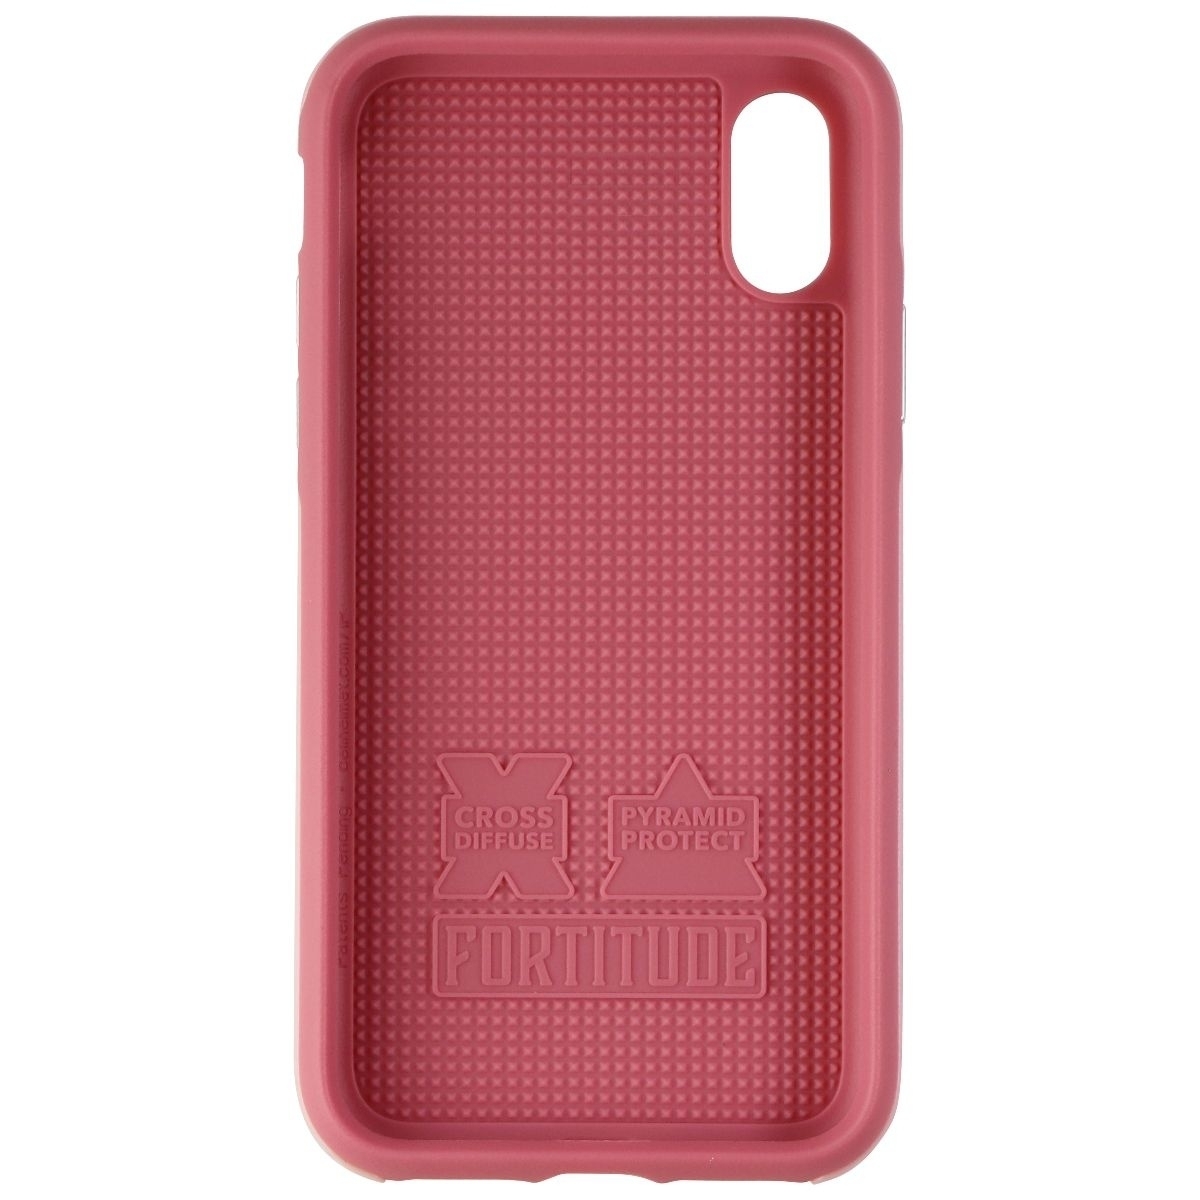 CellHelmet Fortitude Series Case For Apple IPhone XS / X - Pink Magnolia